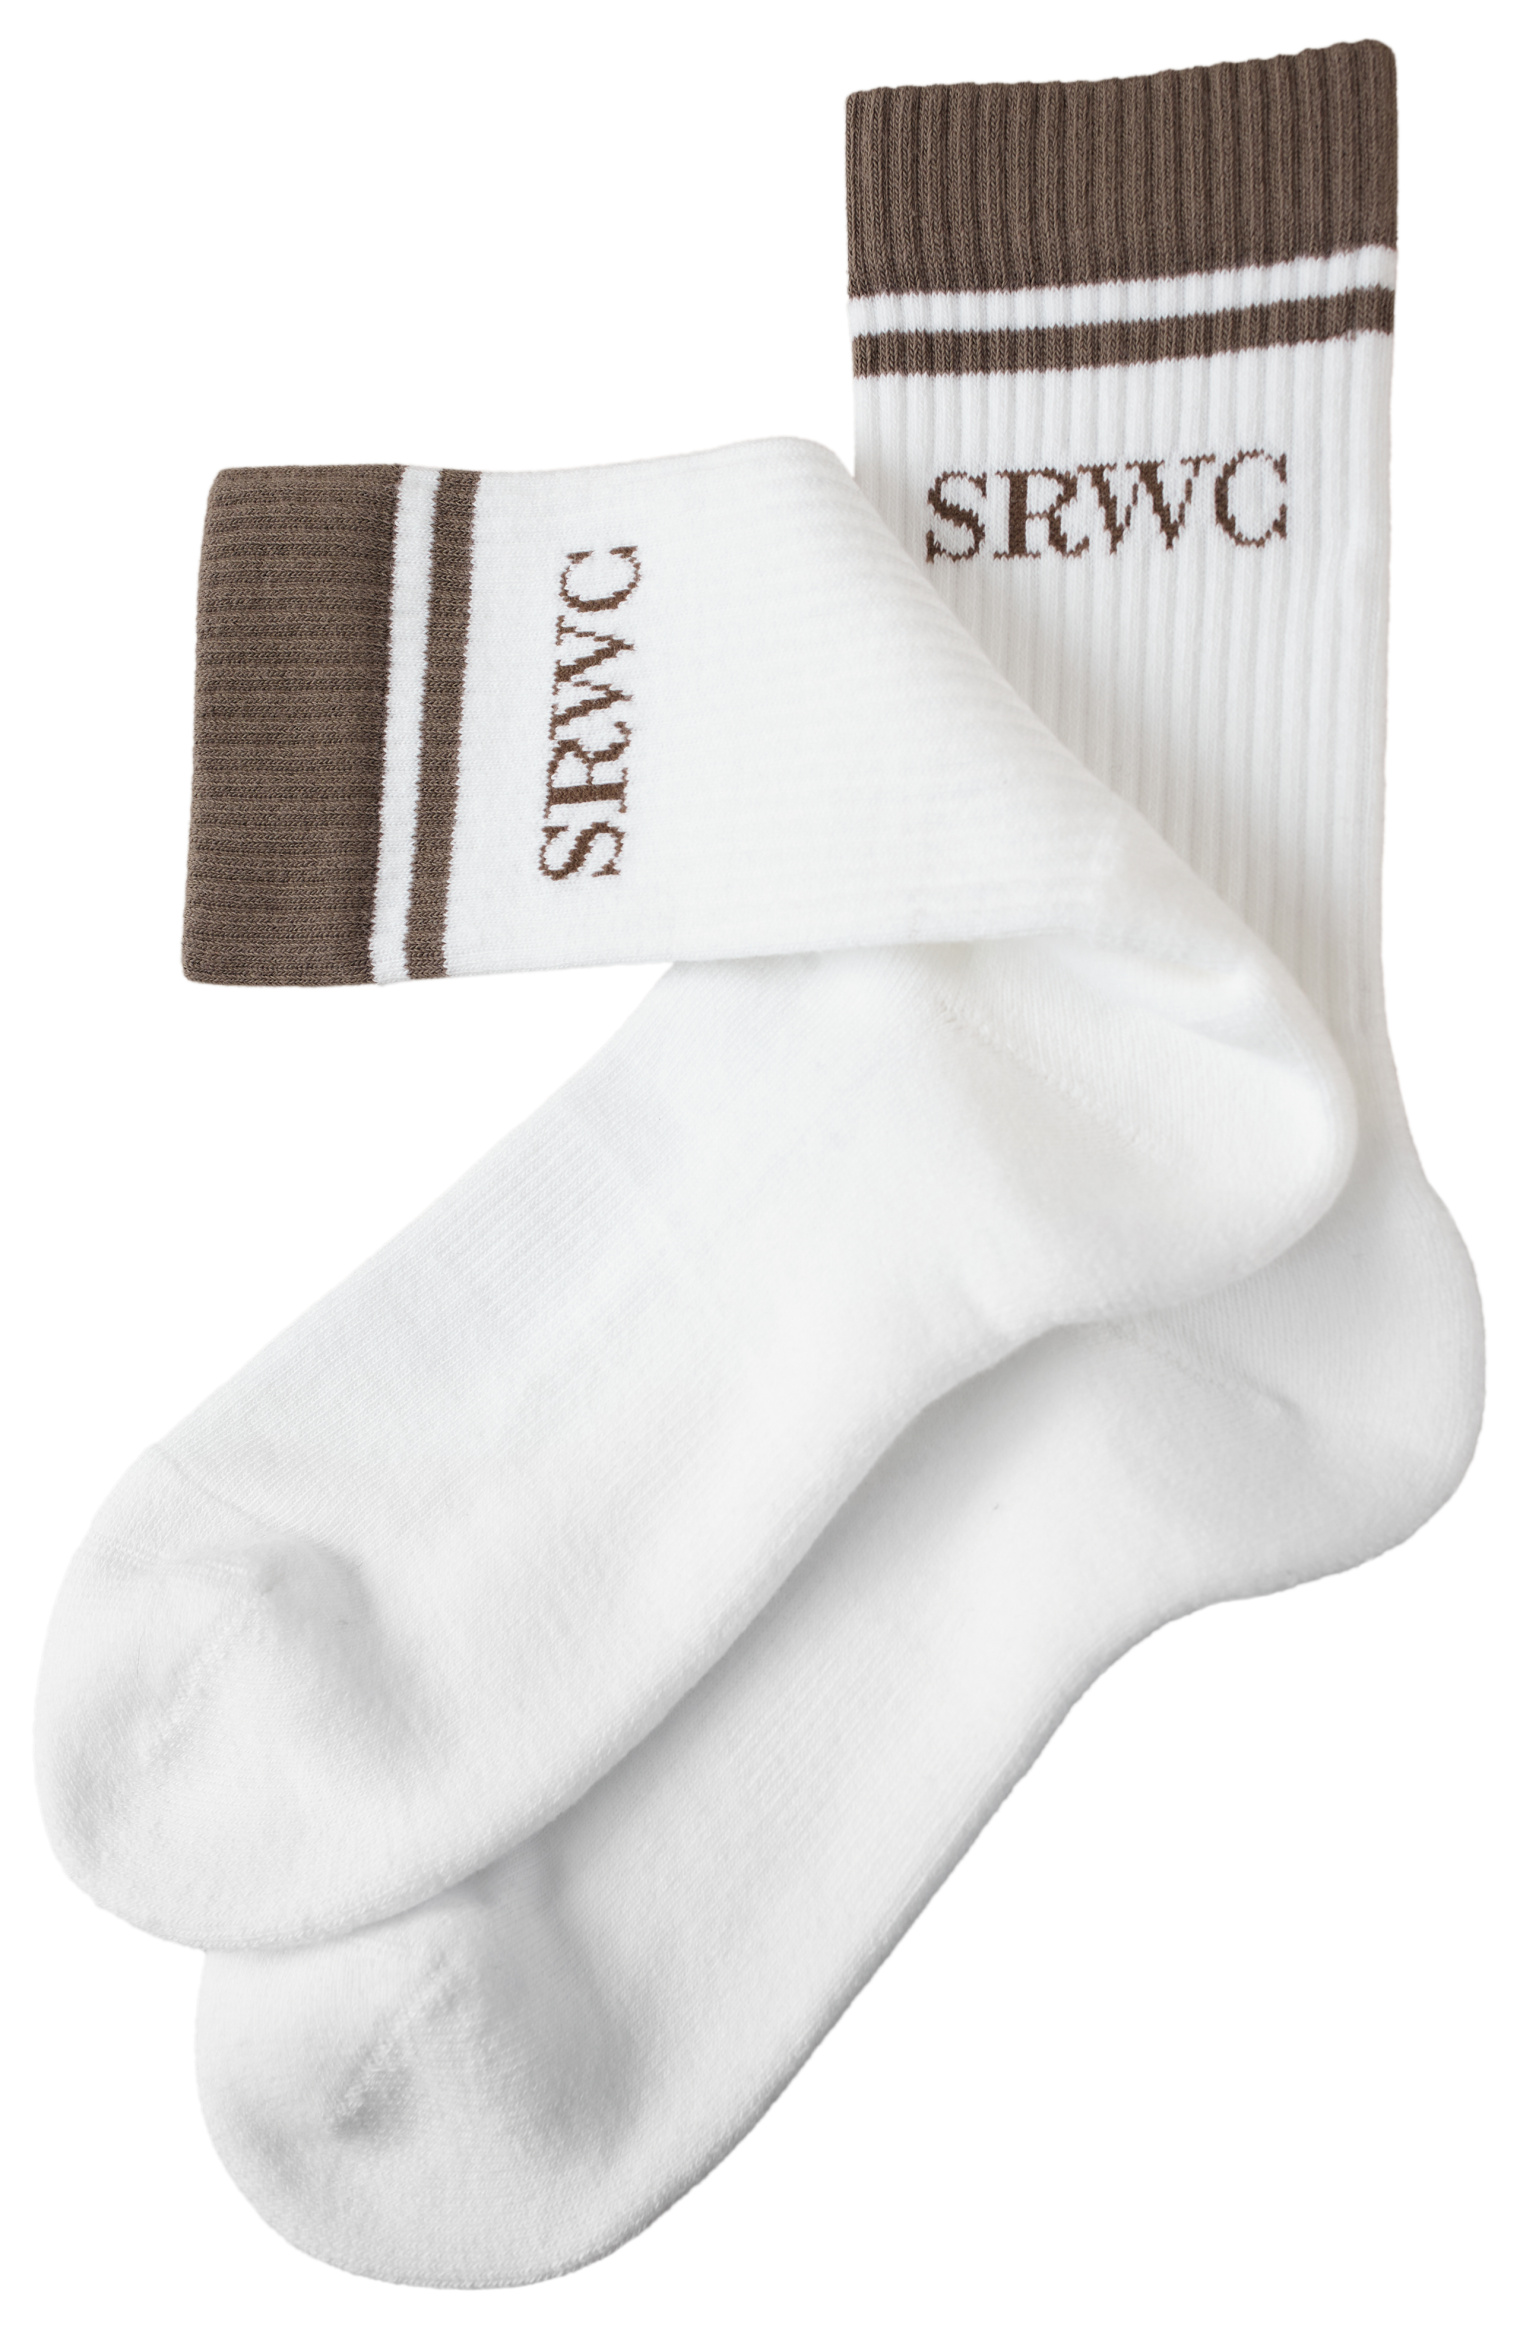 SPORTY & RICH SRWC logo embroidered socks